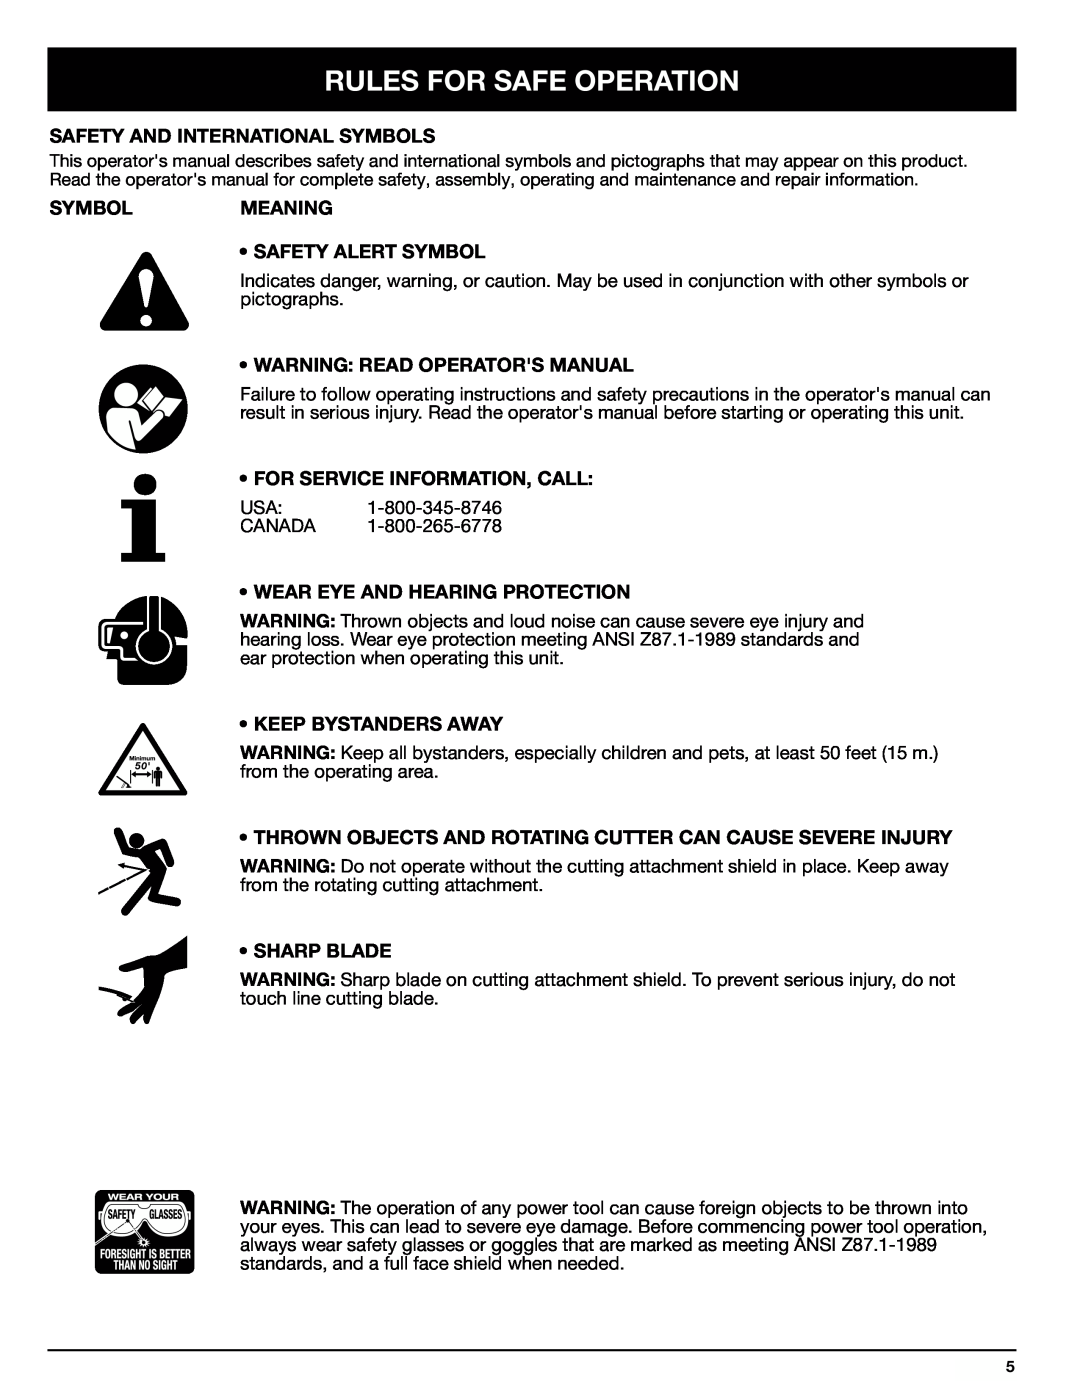 Ryobi 155r Safety And International Symbols, Symbolmeaning Safety Alert Symbol, Warning Read Operators Manual, Sharp Blade 